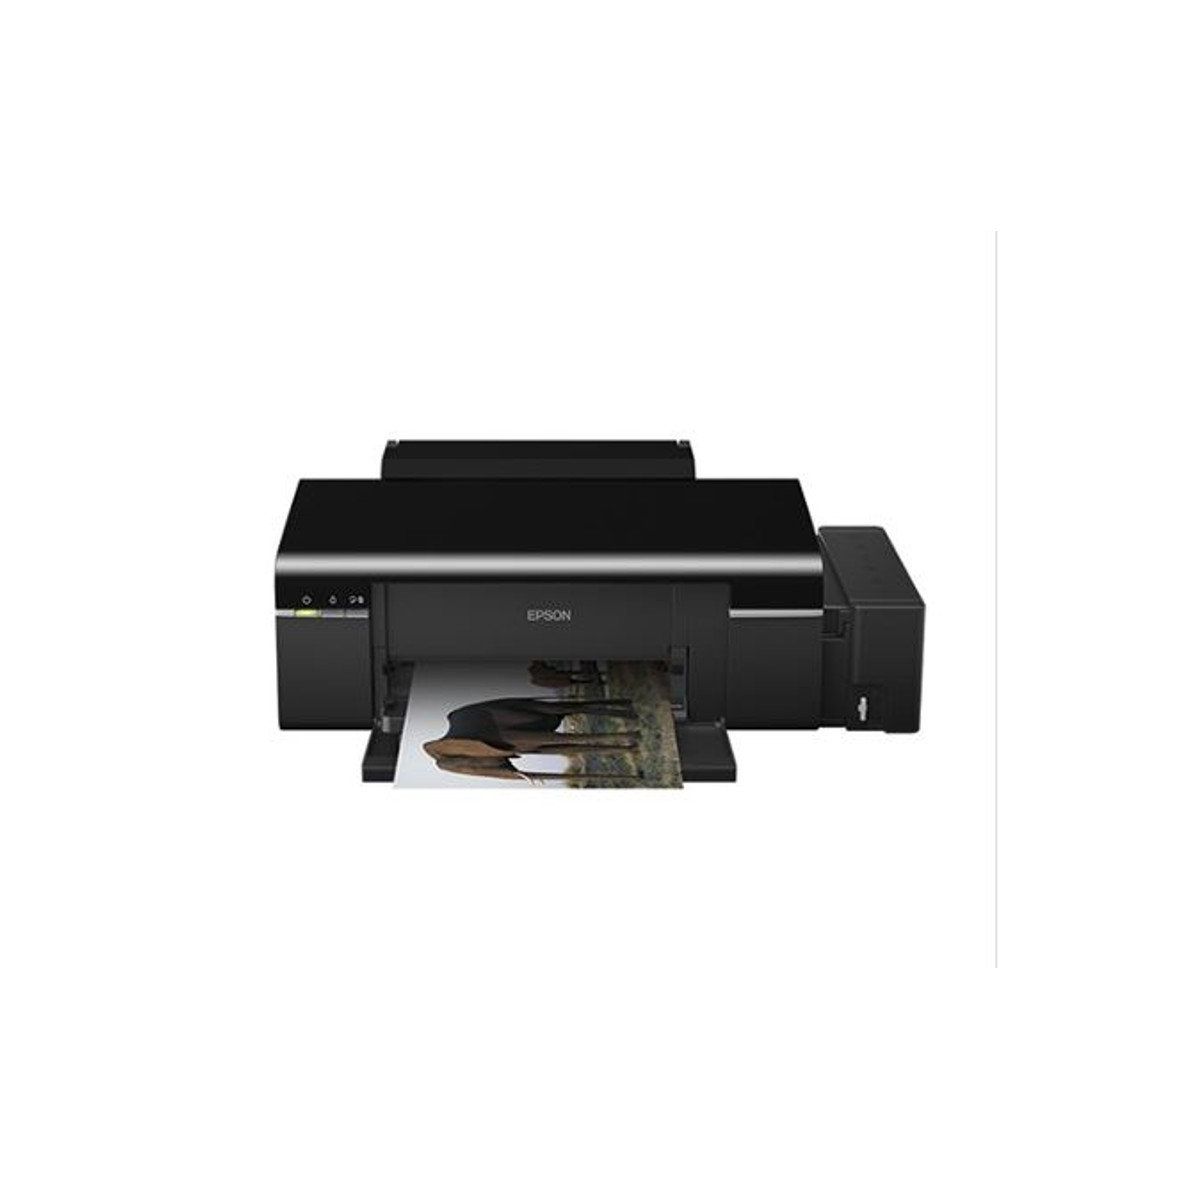 Epson l800 печать. Epson l800. Принтер Эпсон л800. Принтер Epson l800. Цветной струйный принтер - Epson l800.